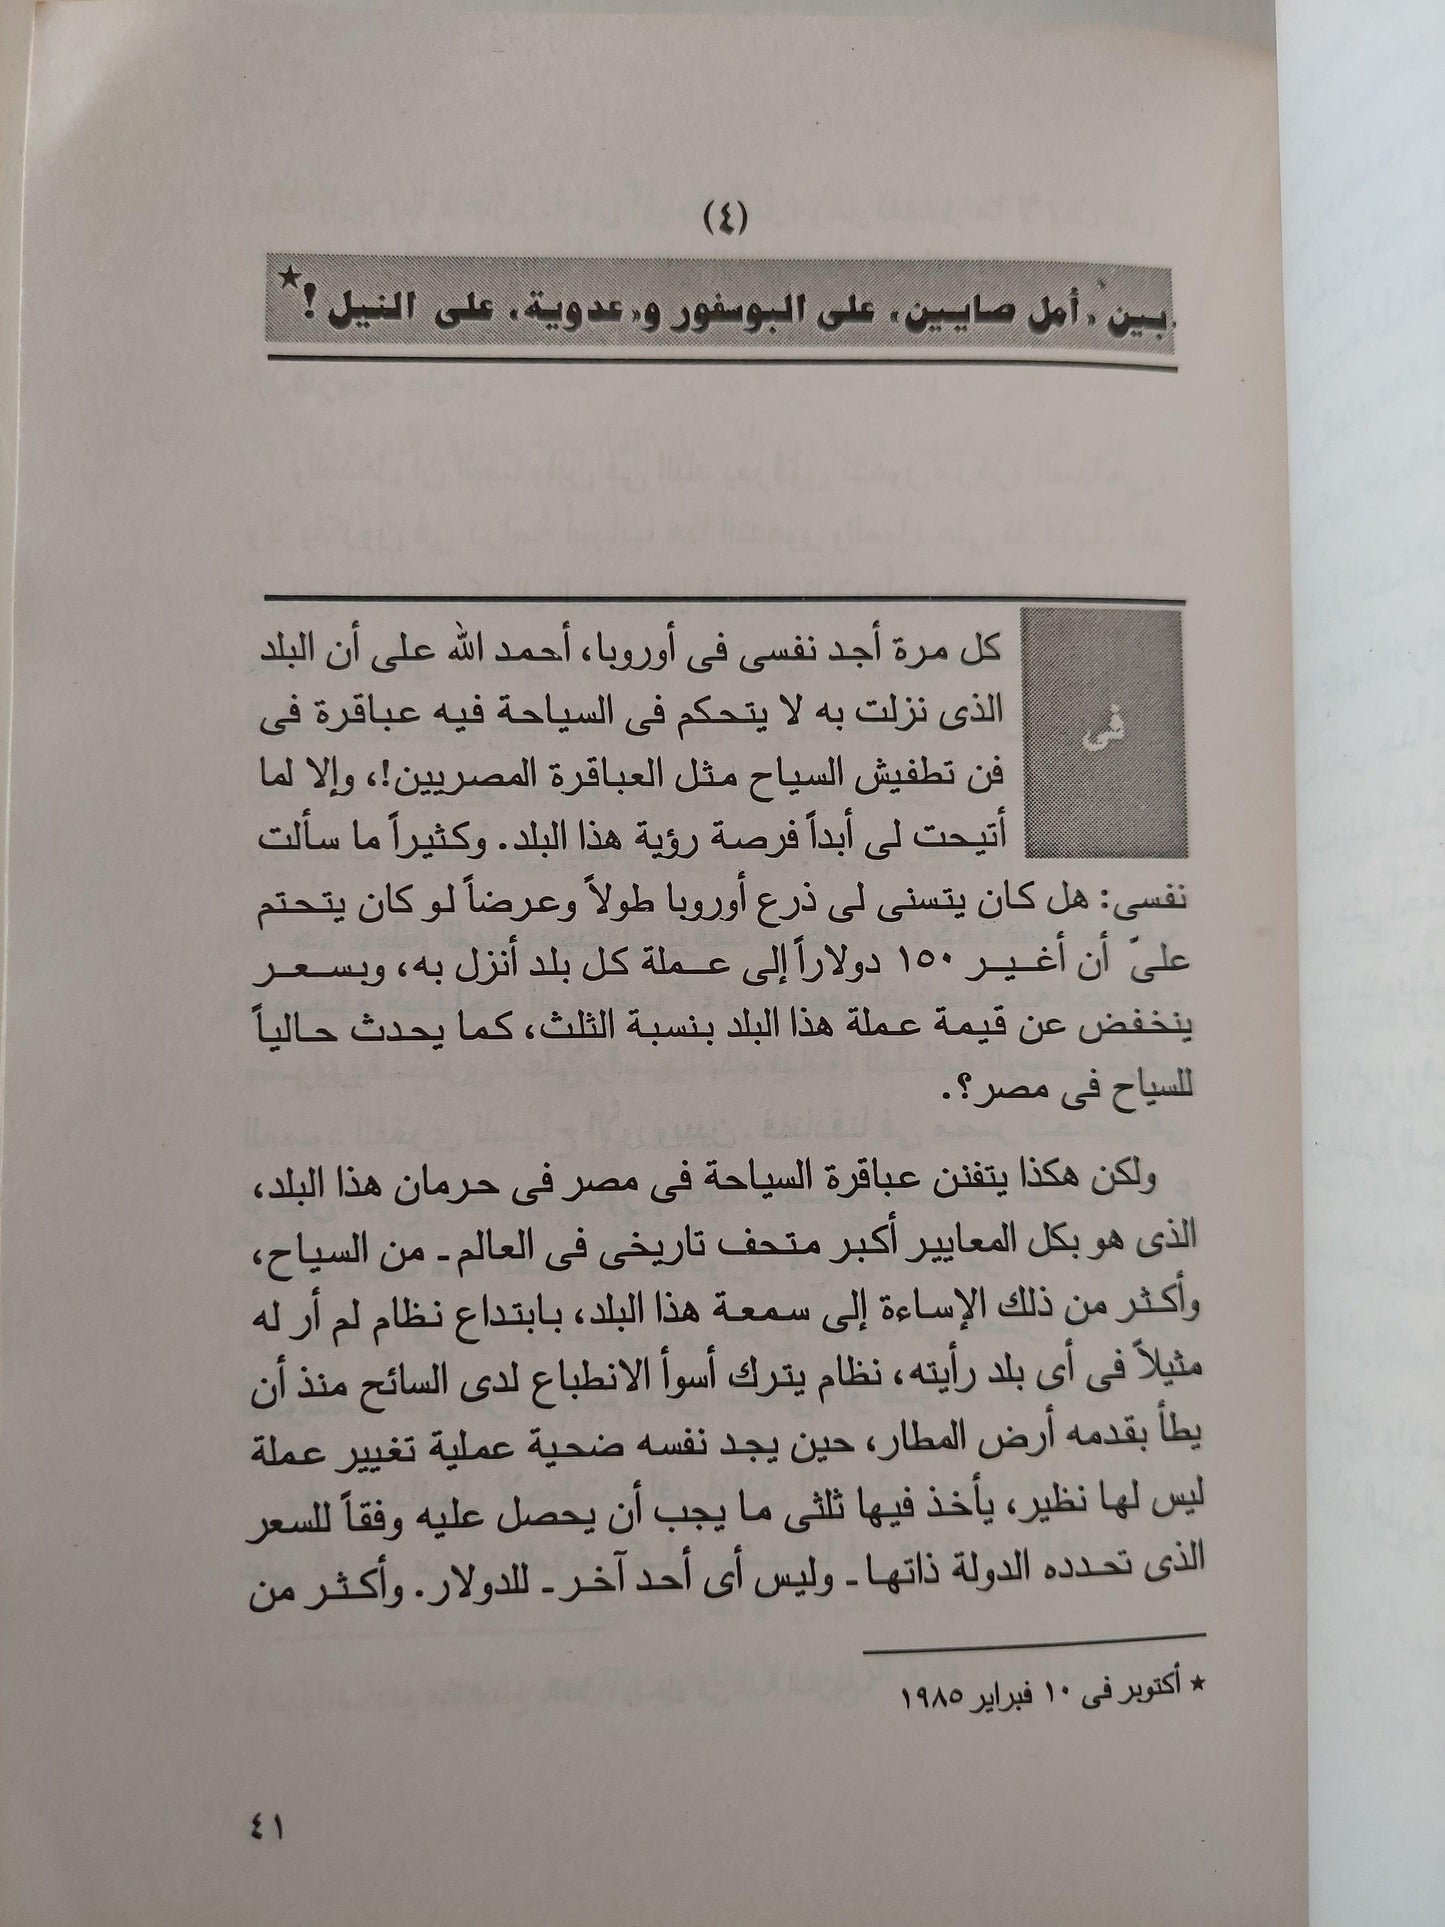 رحلات مؤرخ : خواطر وانطباعات / د. عبد العظيم رمضان - متجر كتب مصر